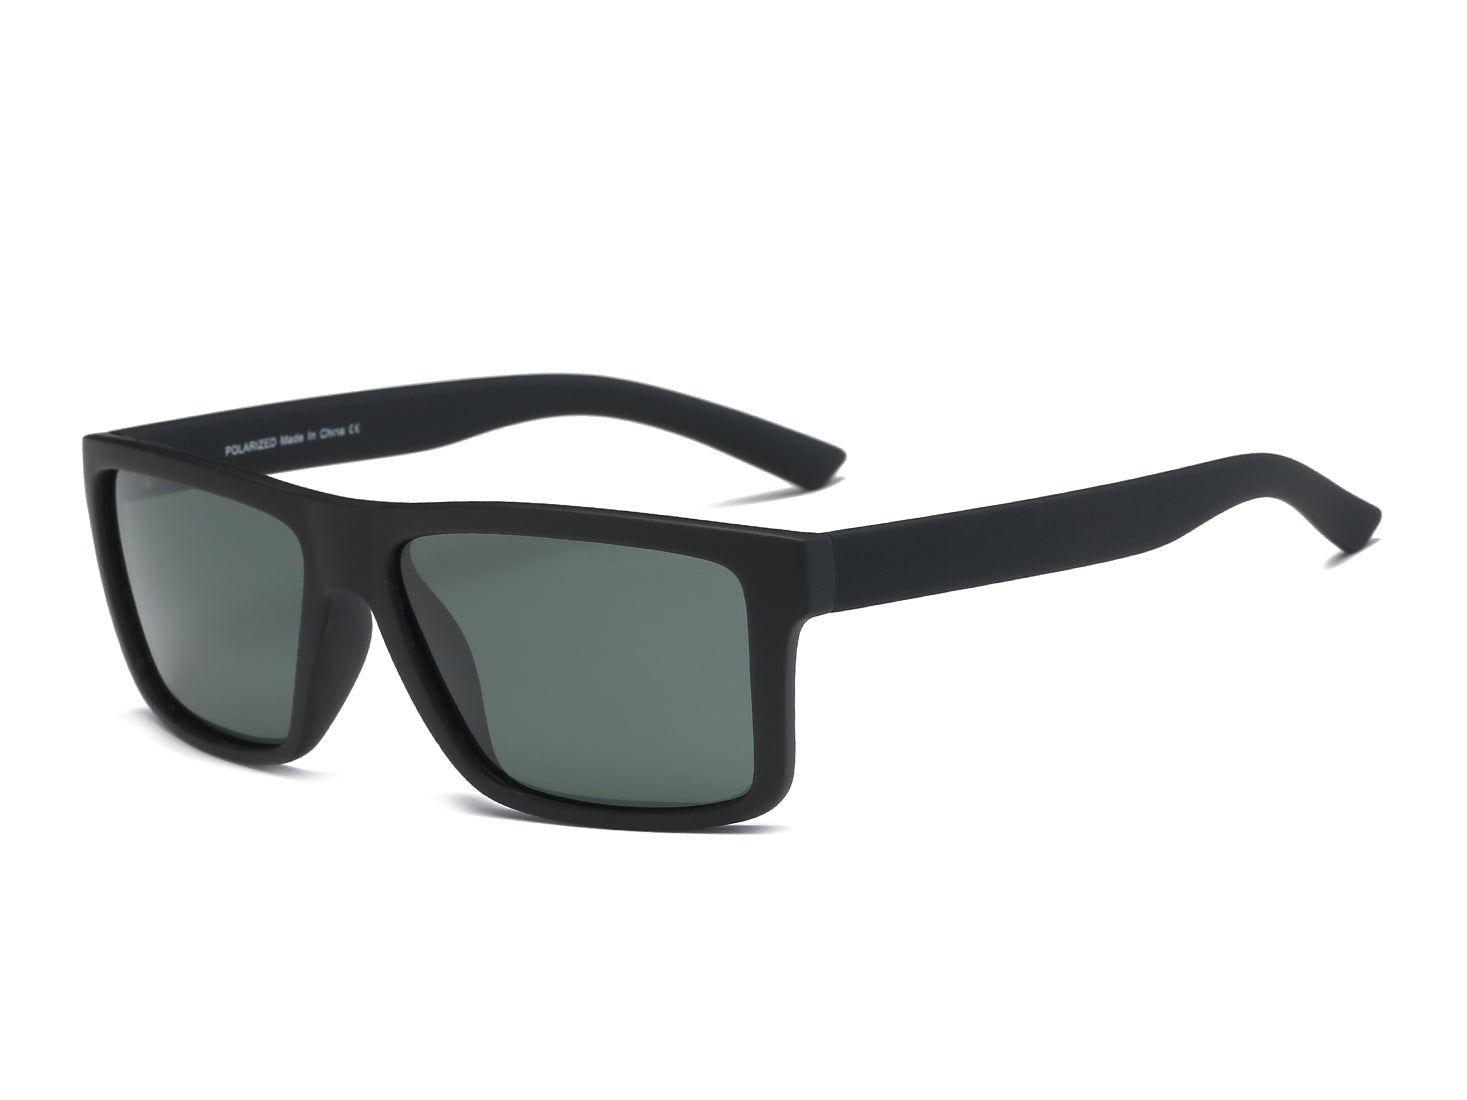 P1002 - Retro Polarized Rectangle Sunglasses Matte black FRAME with green lens